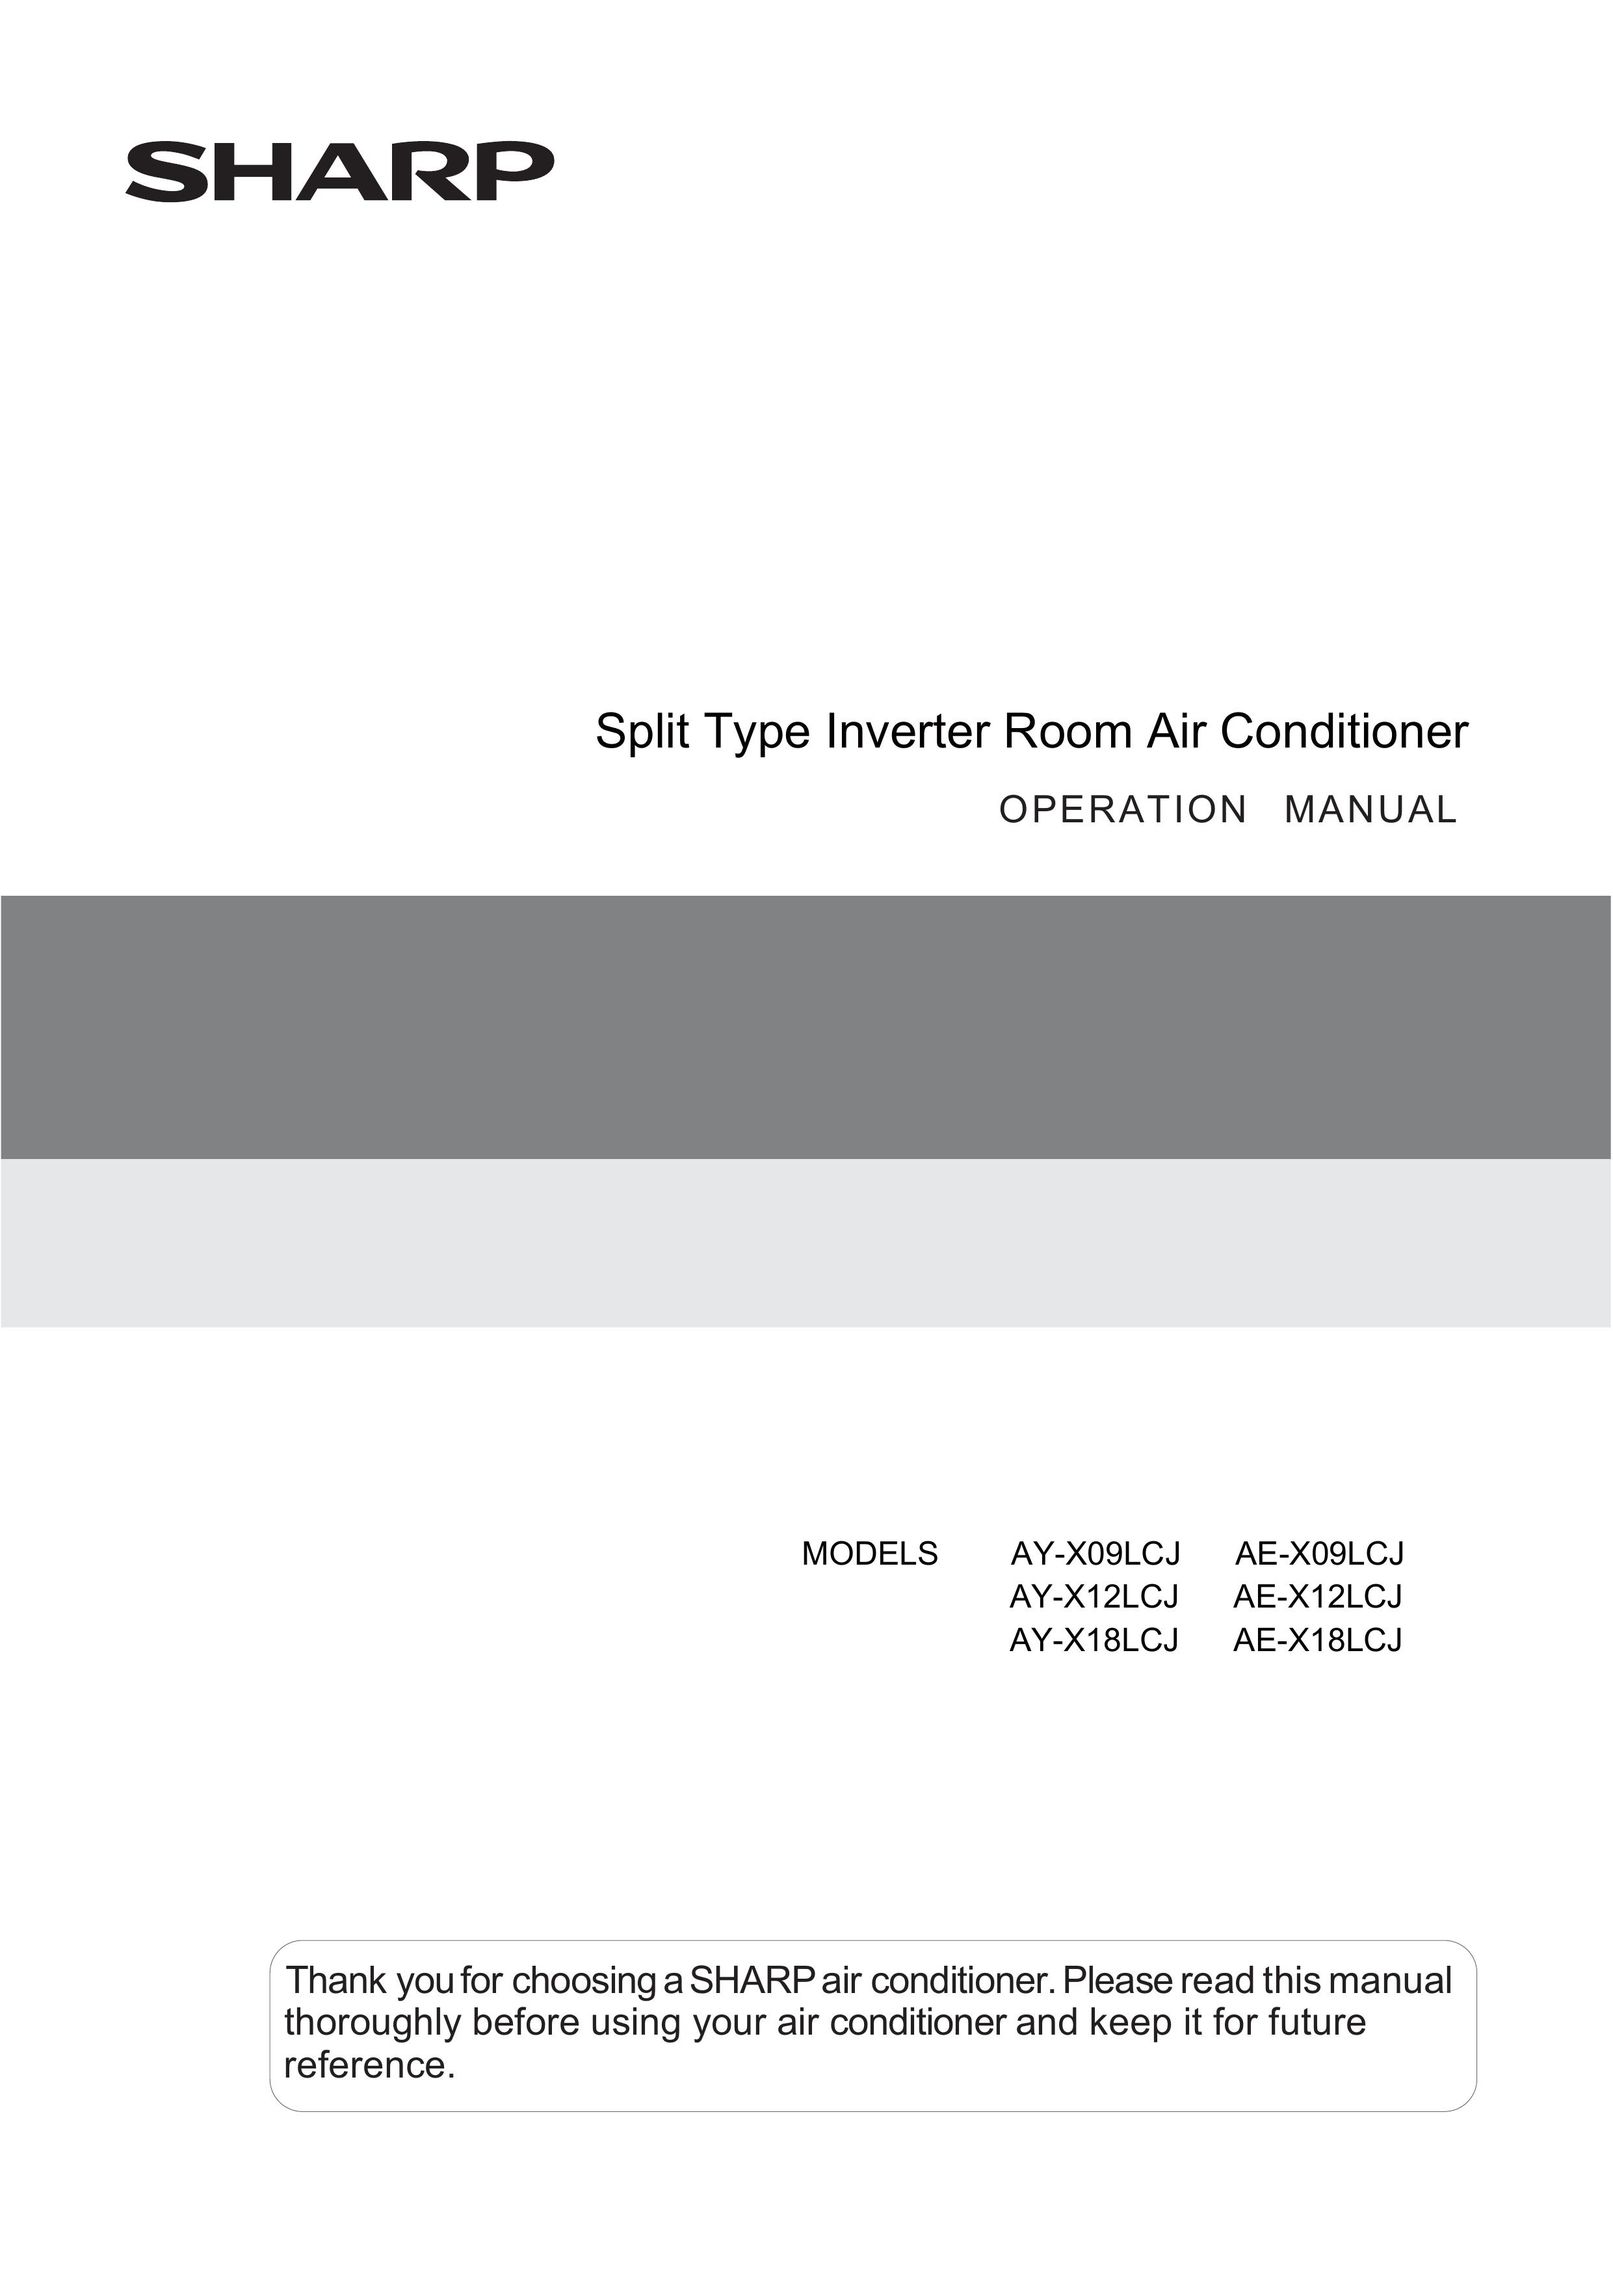 Sharp AE-X12LCJ Air Conditioner User Manual